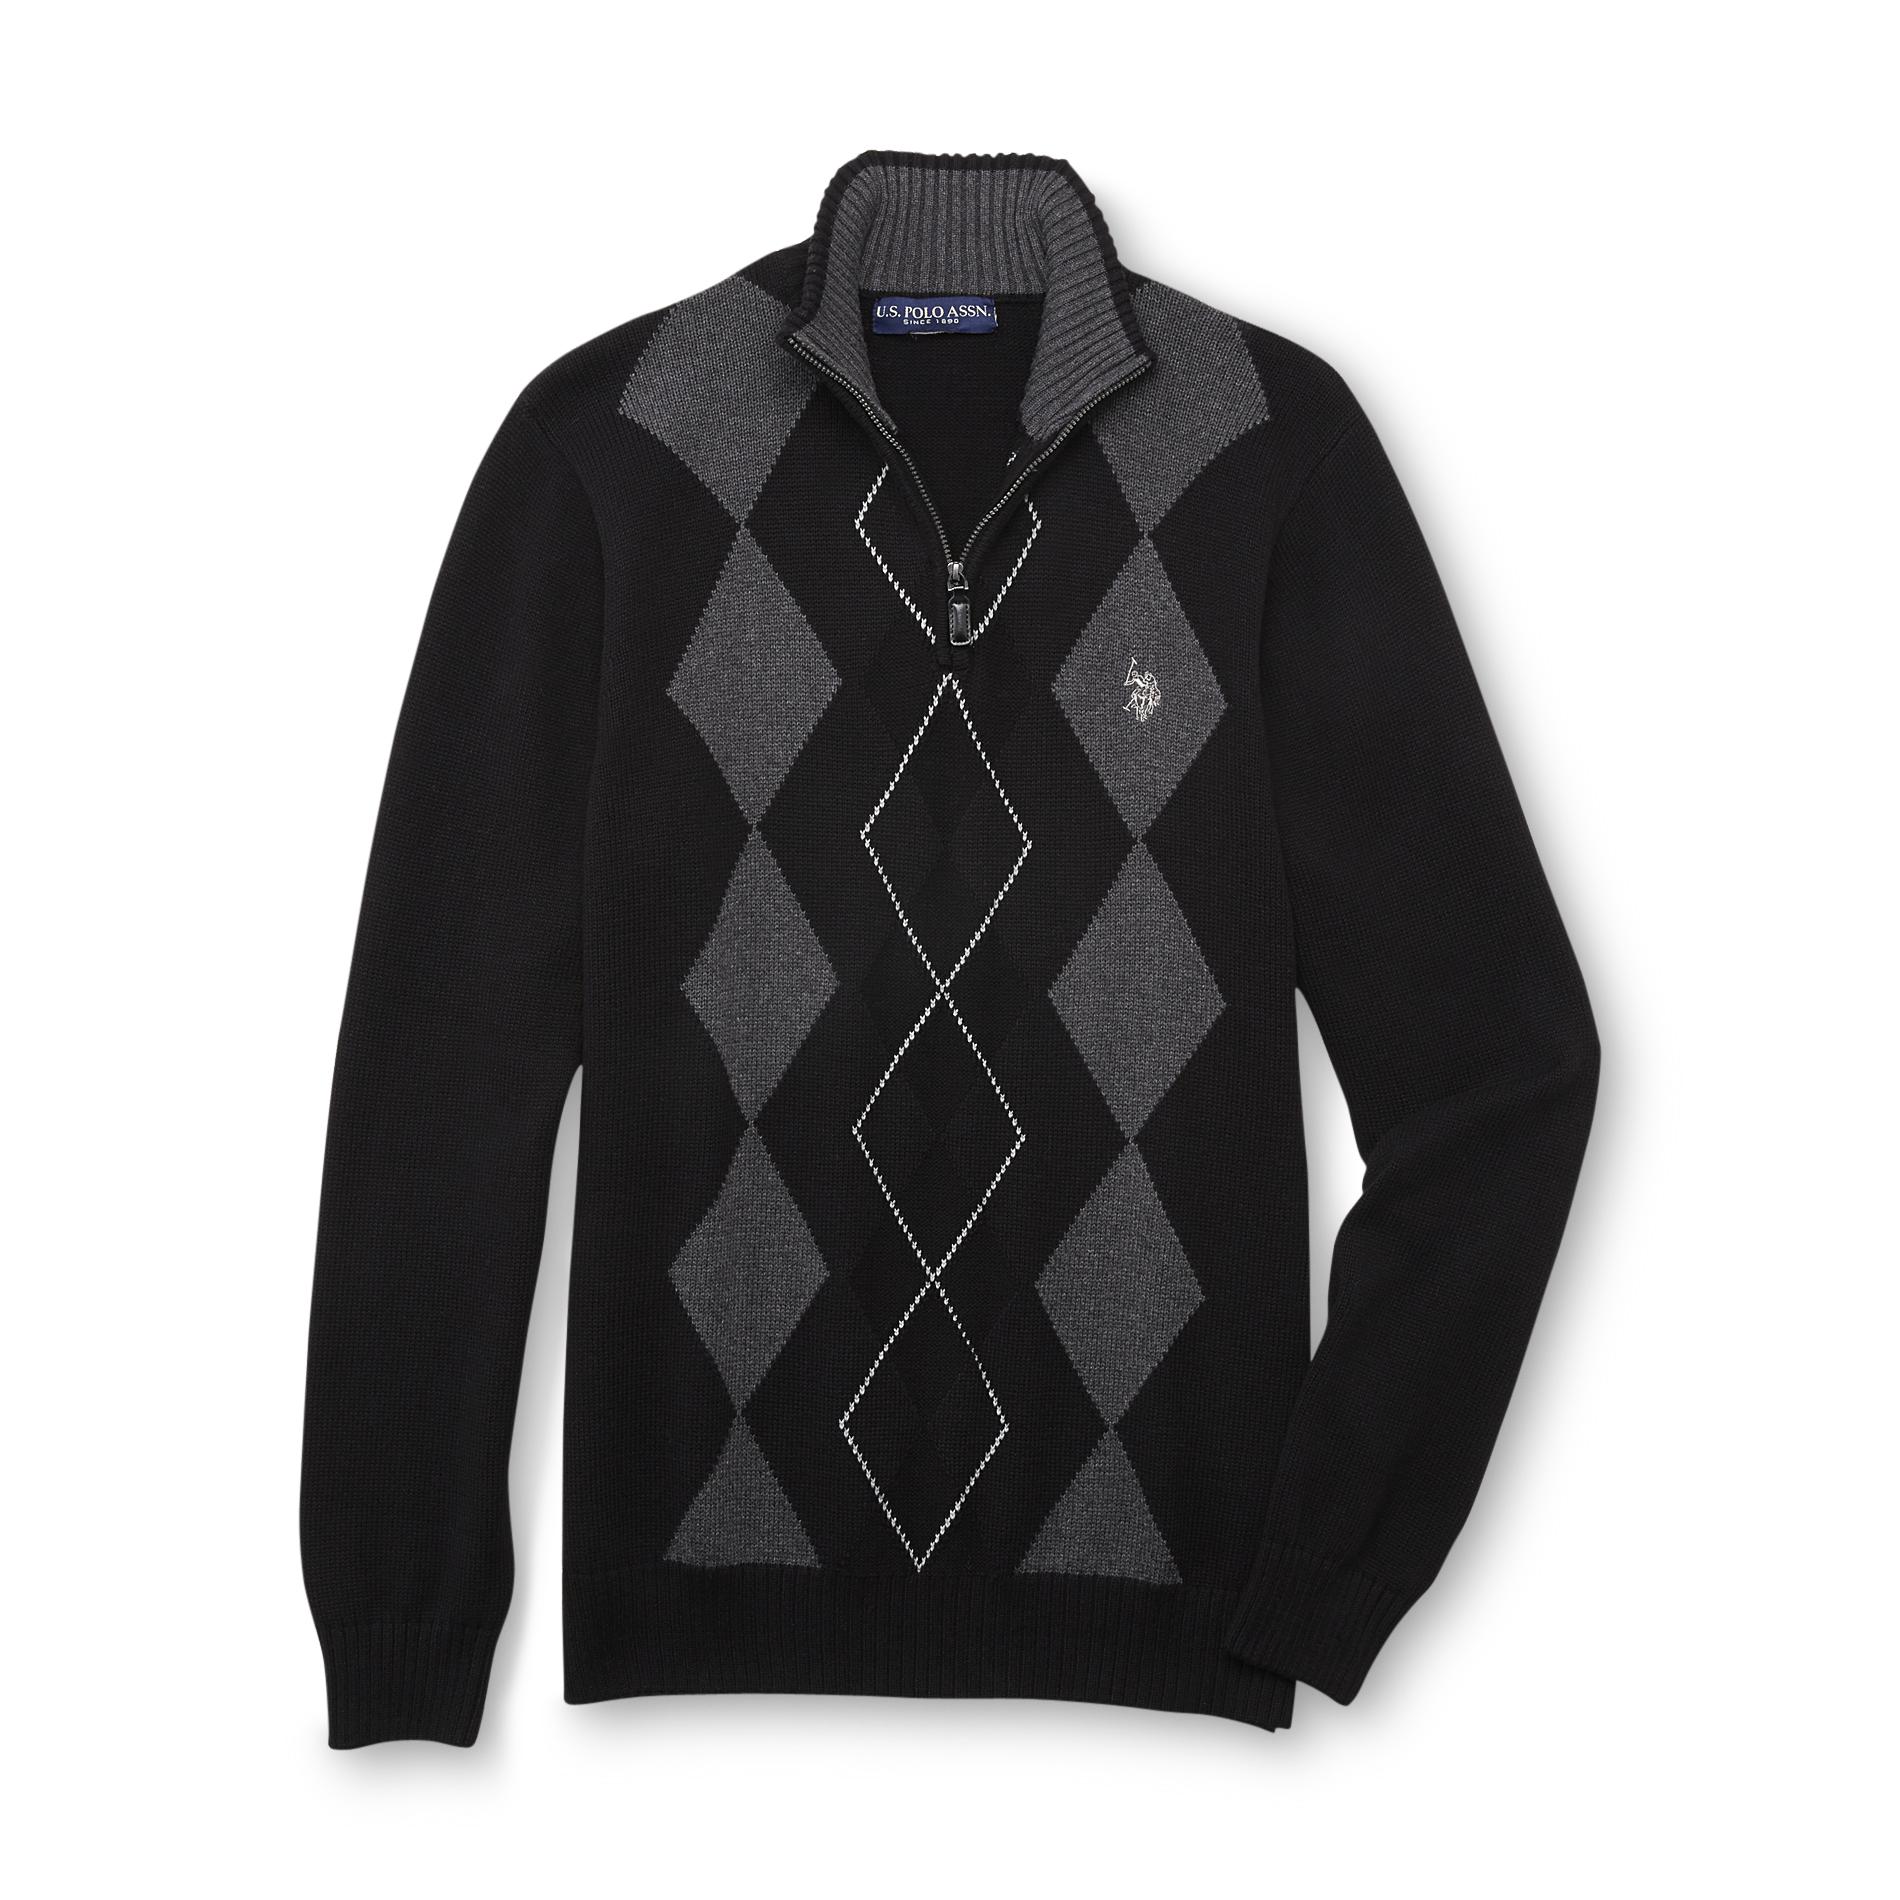 U.S. Polo Assn. Men's Quarter-Zip Sweater - Argyle